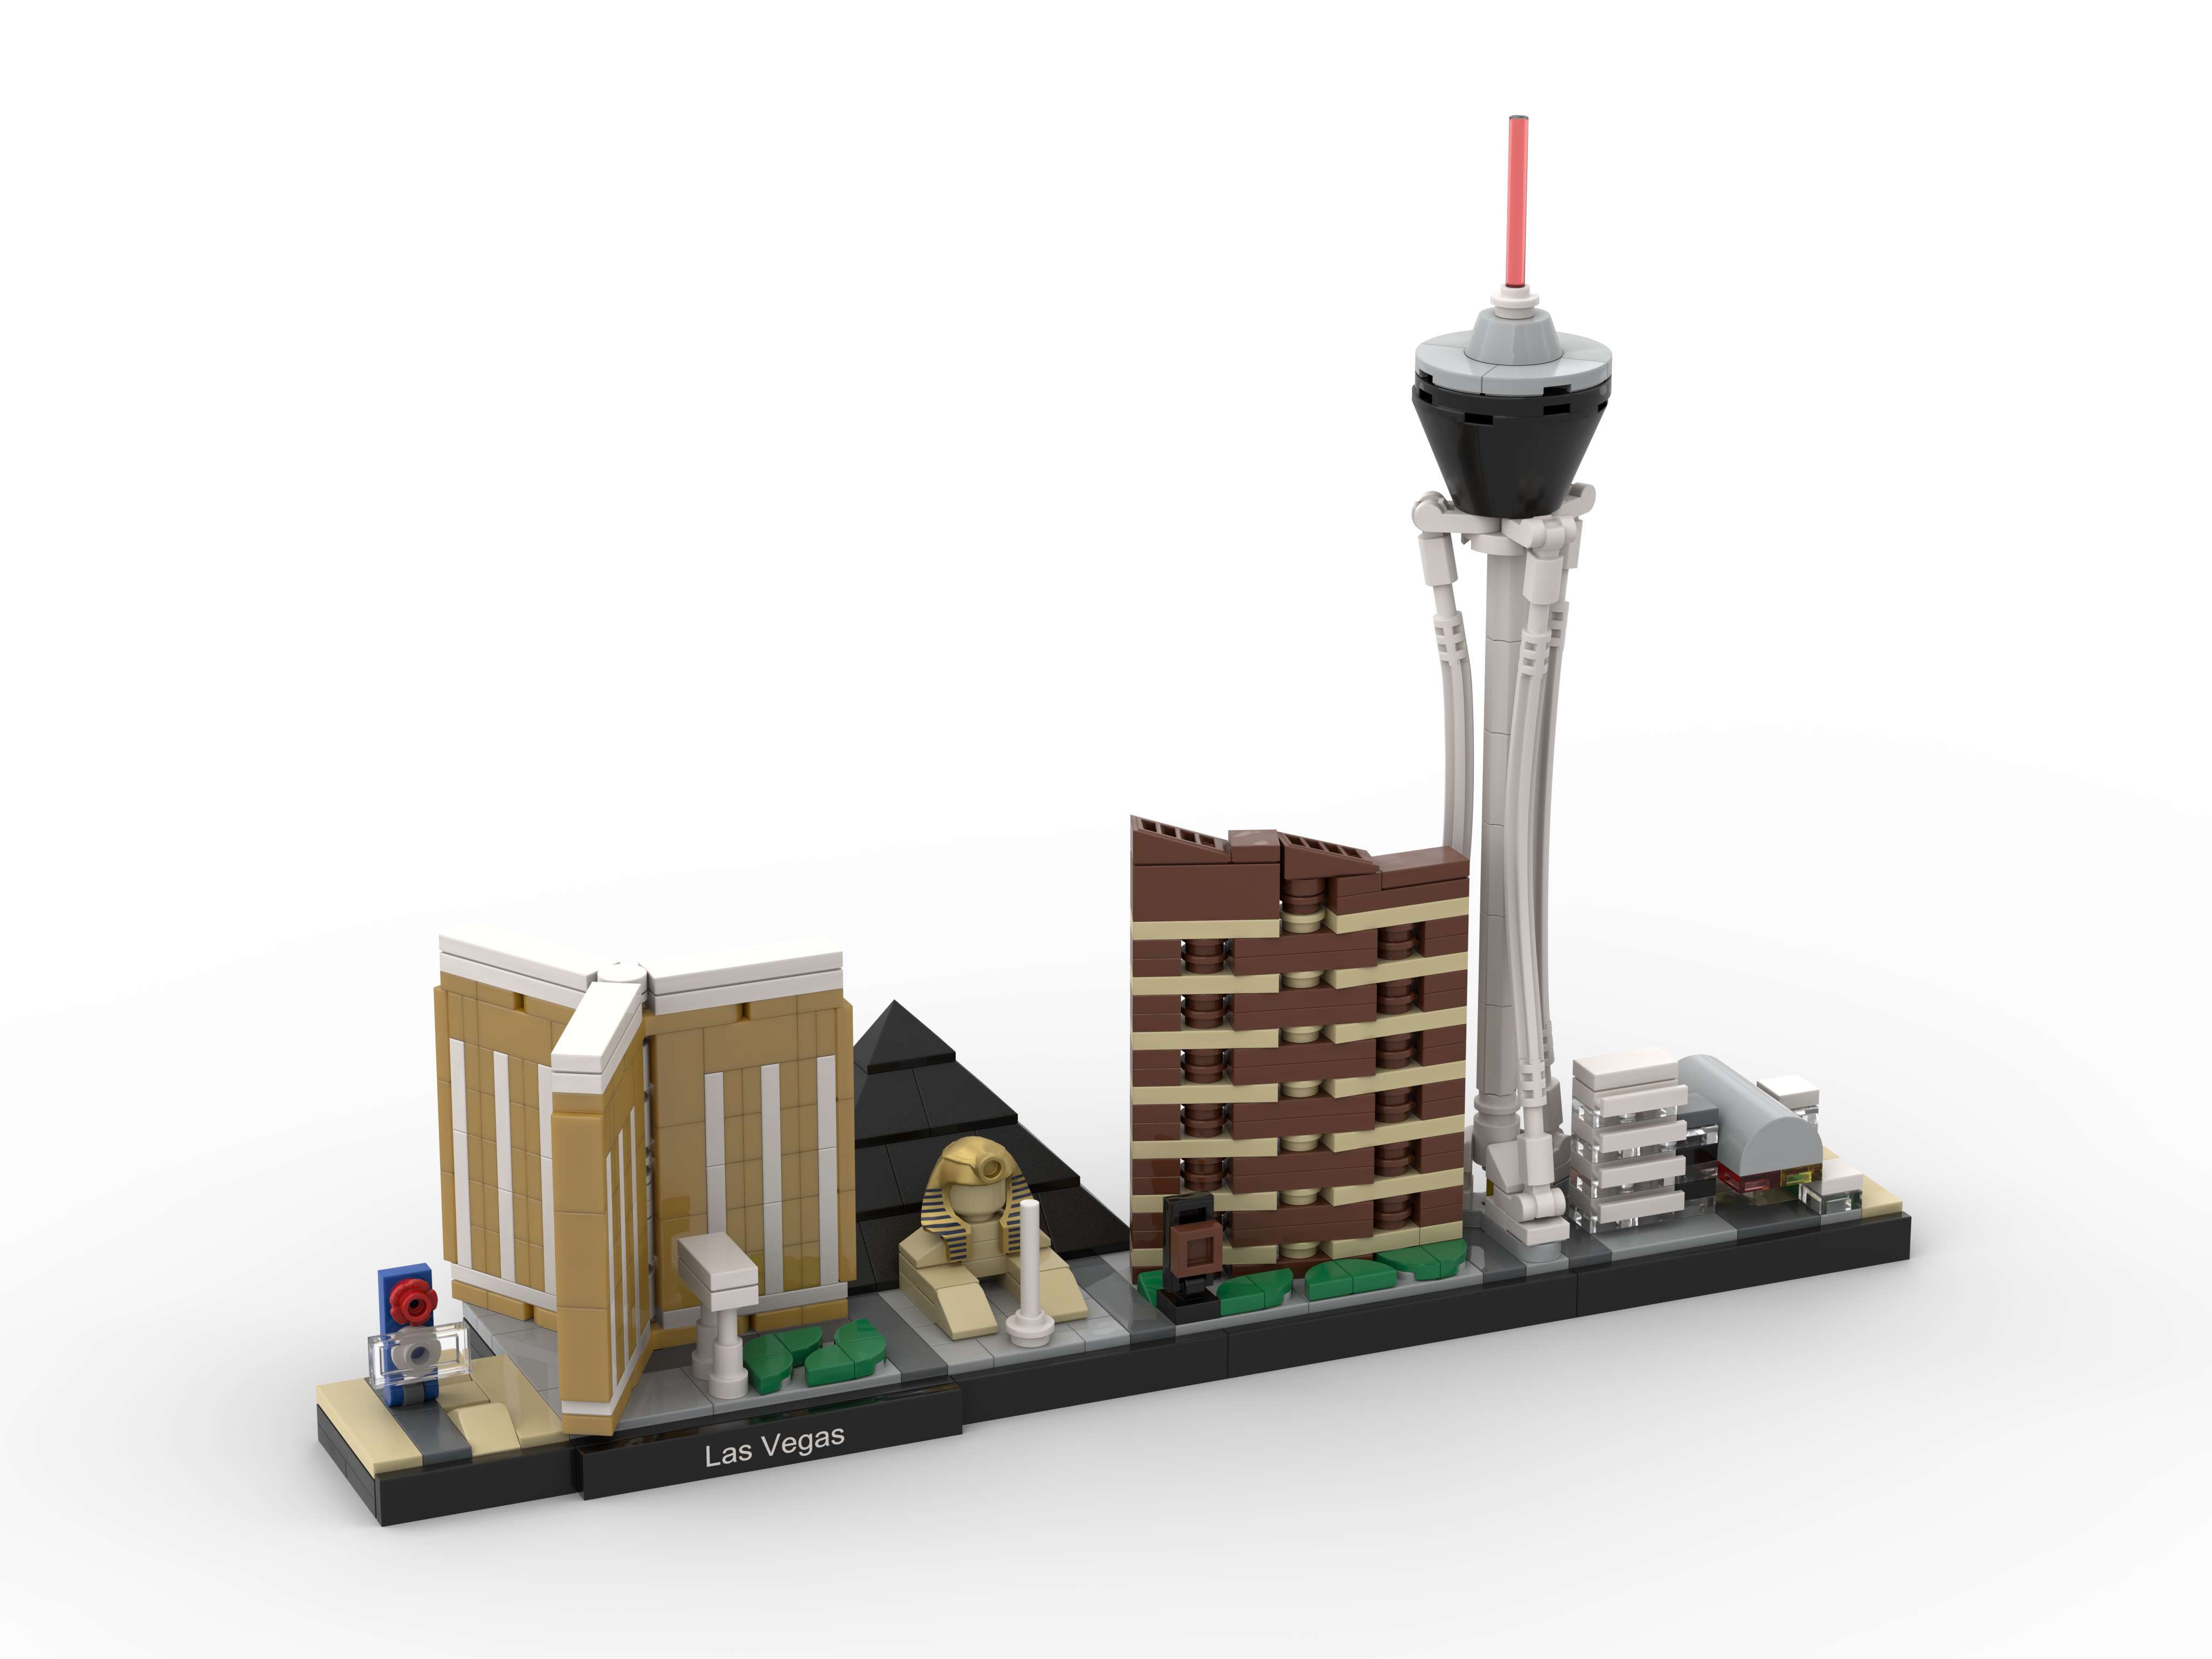 Cancelled LEGO Architecture 21308 Las Vegas set actually exists